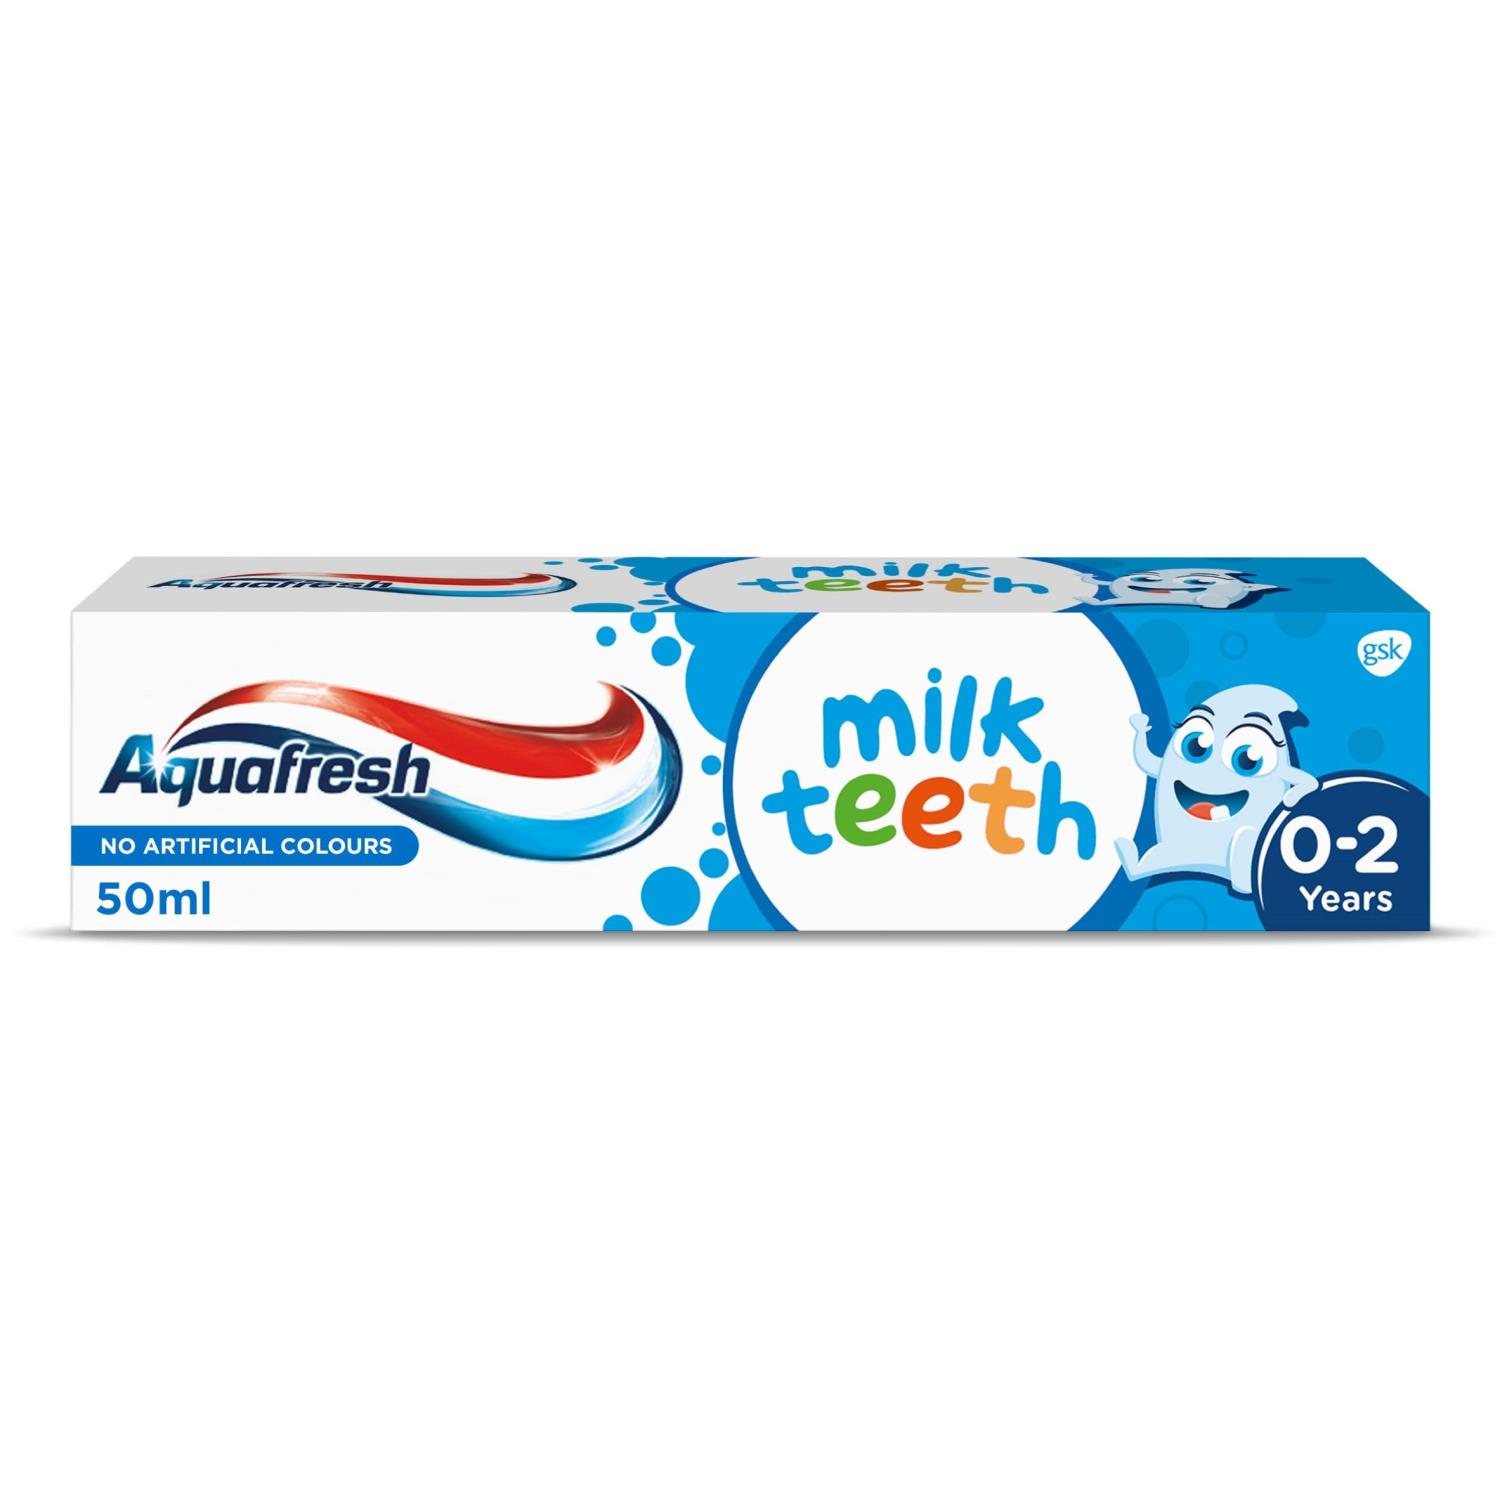 Aquafresh Toothpaste Milk Teeth 0-2 Years 50ml x 12